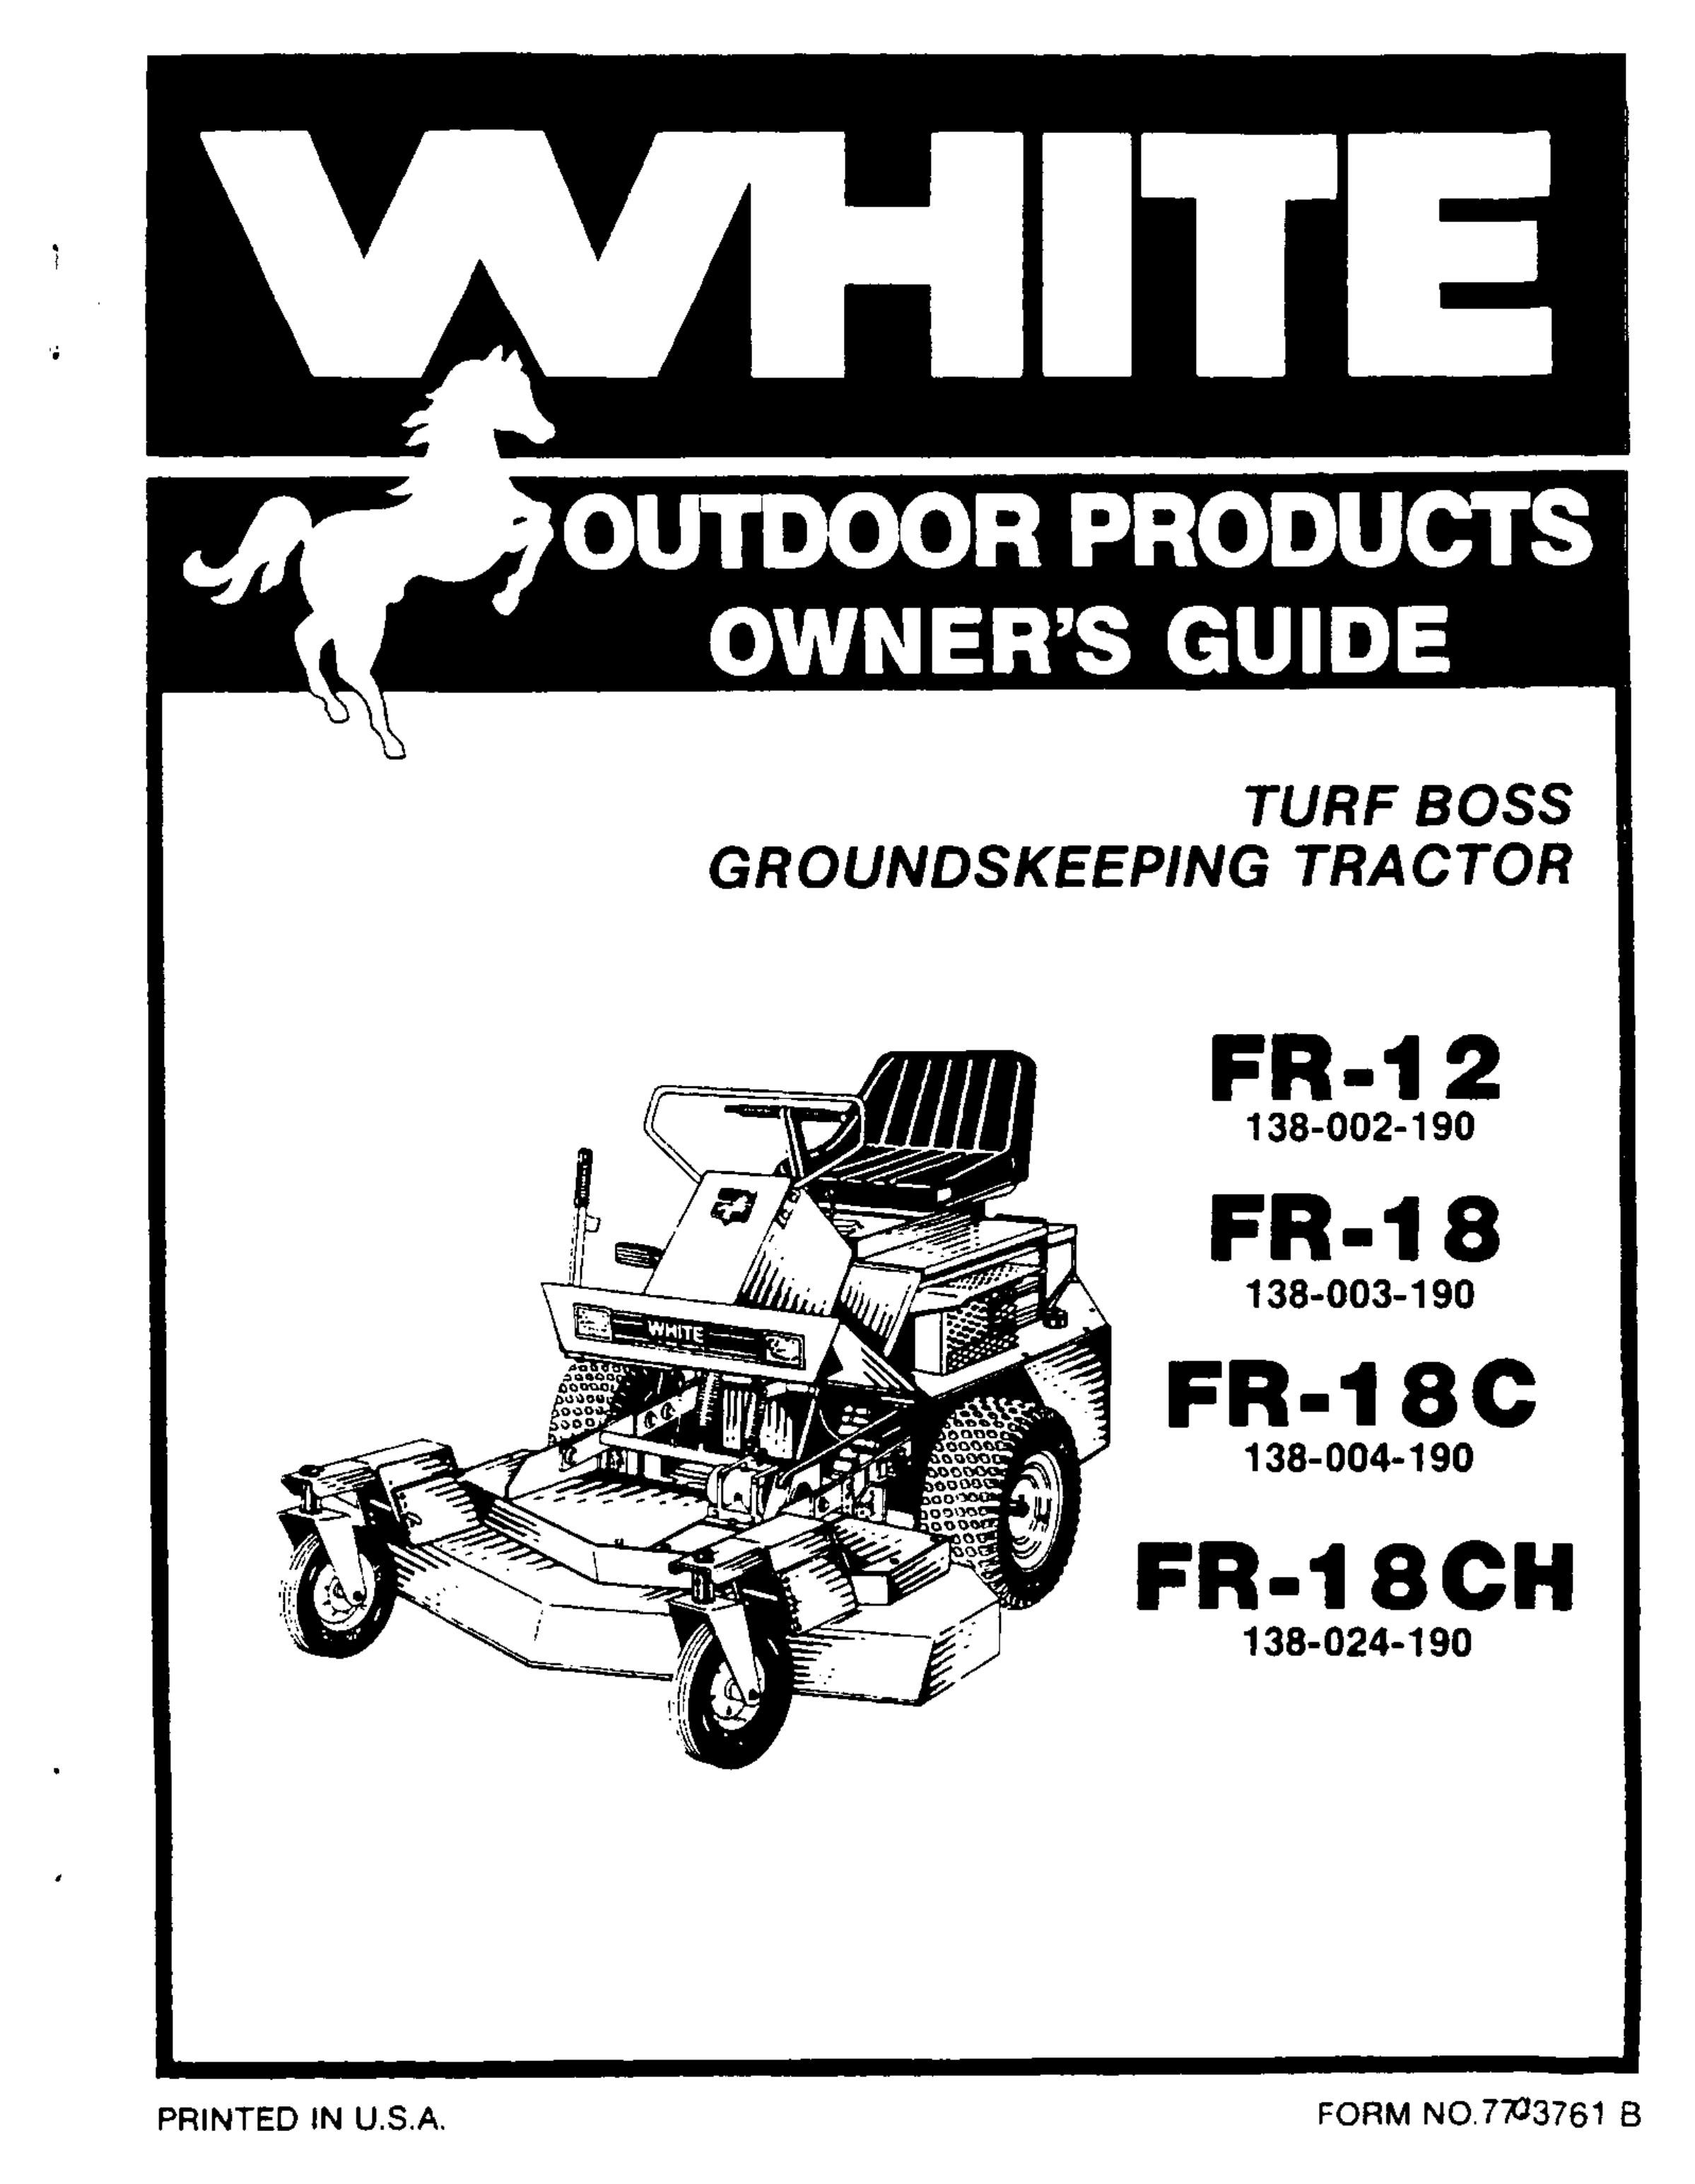 White FR18CH Lawn Mower User Manual